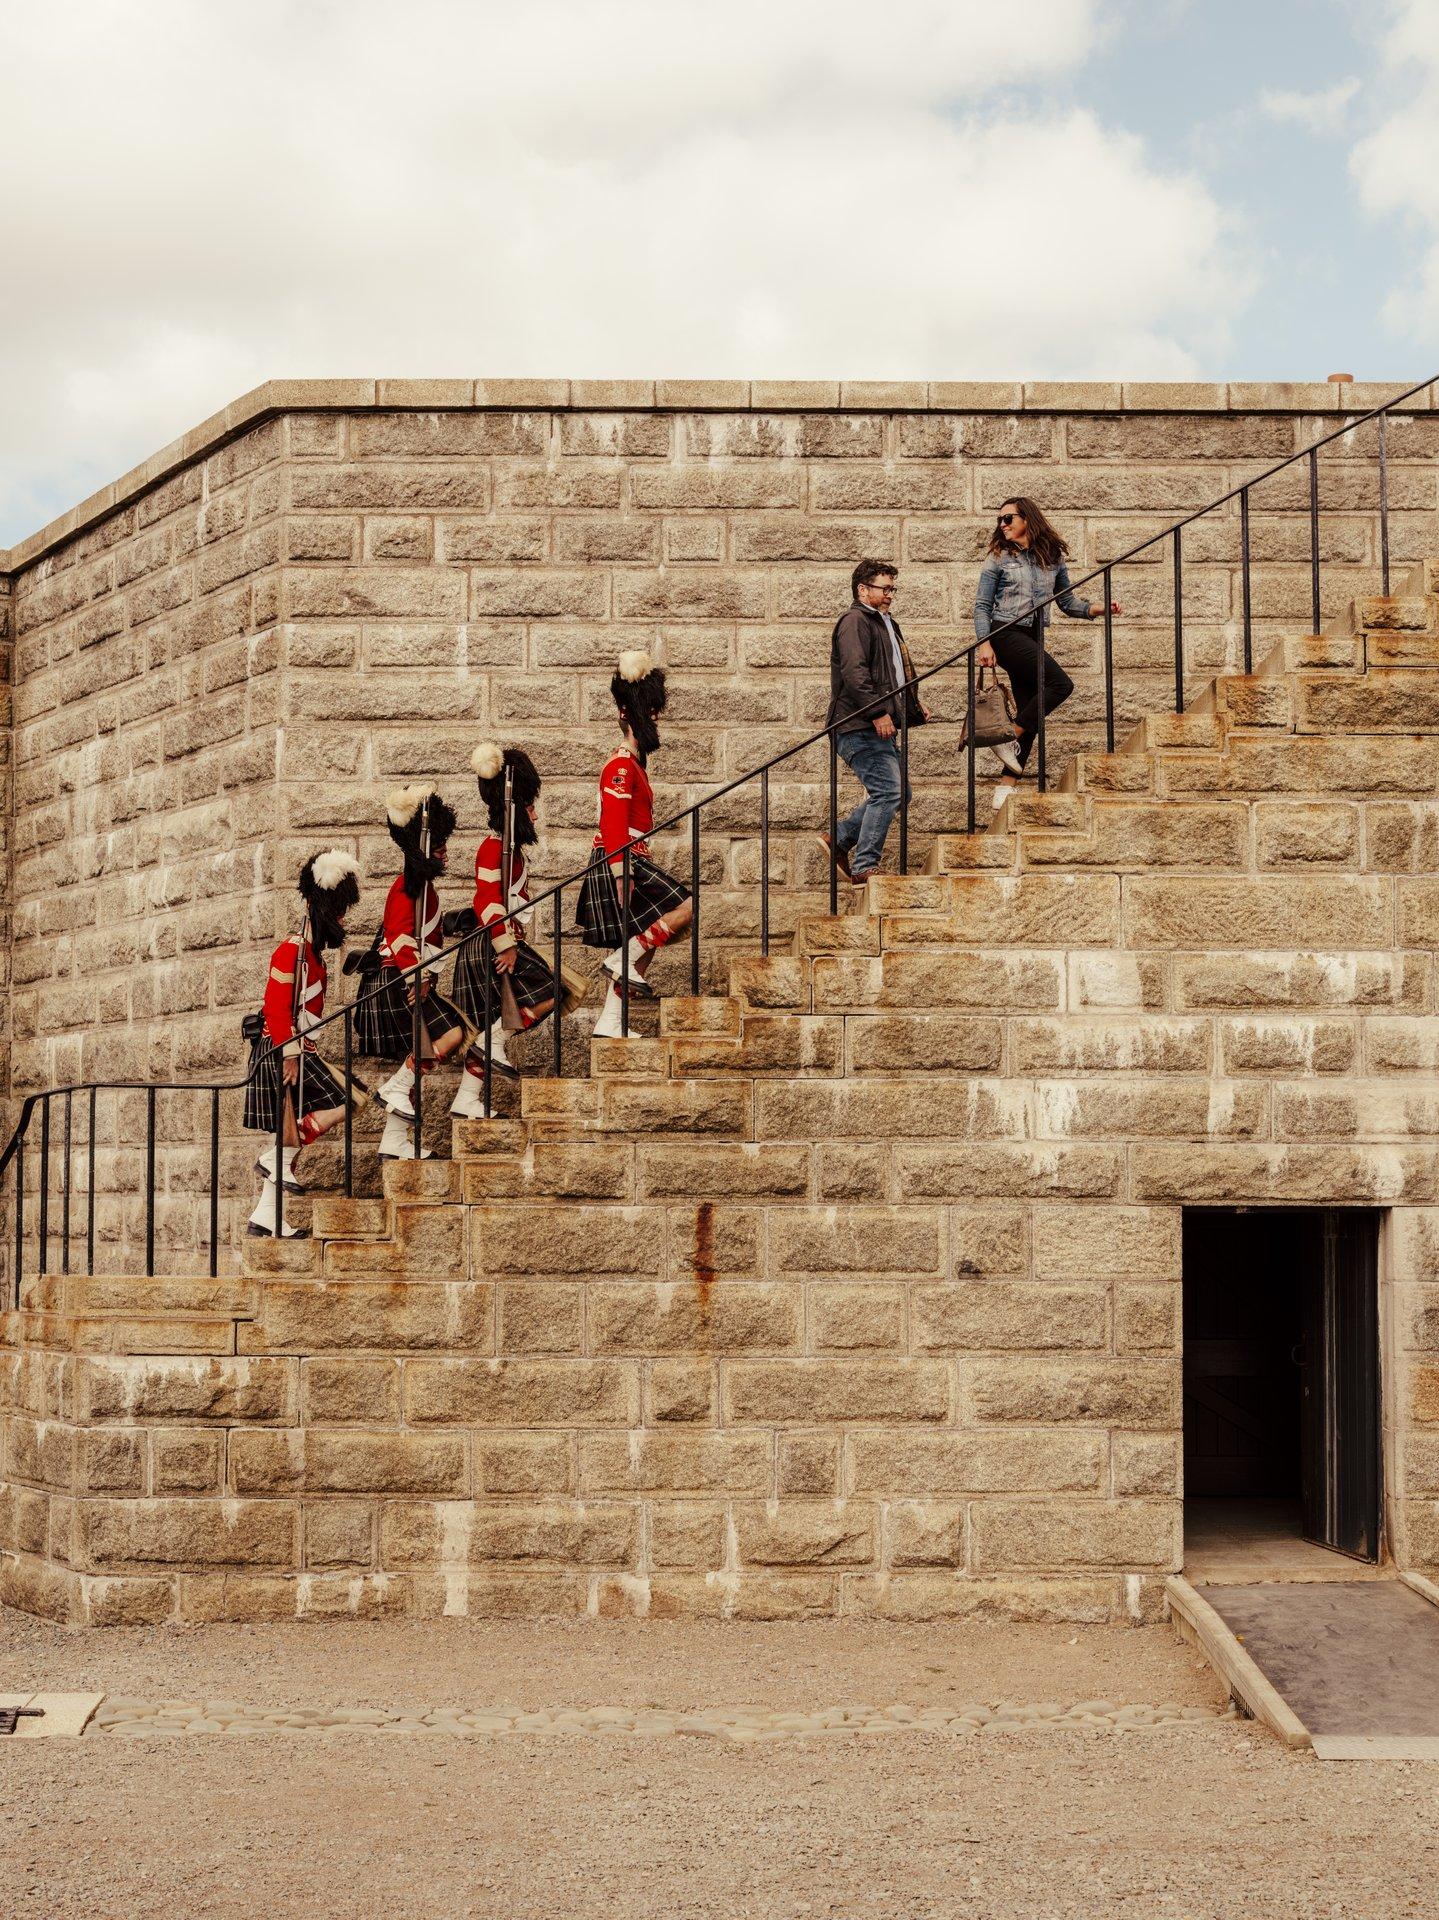 Halifax Citadel National Historic Site